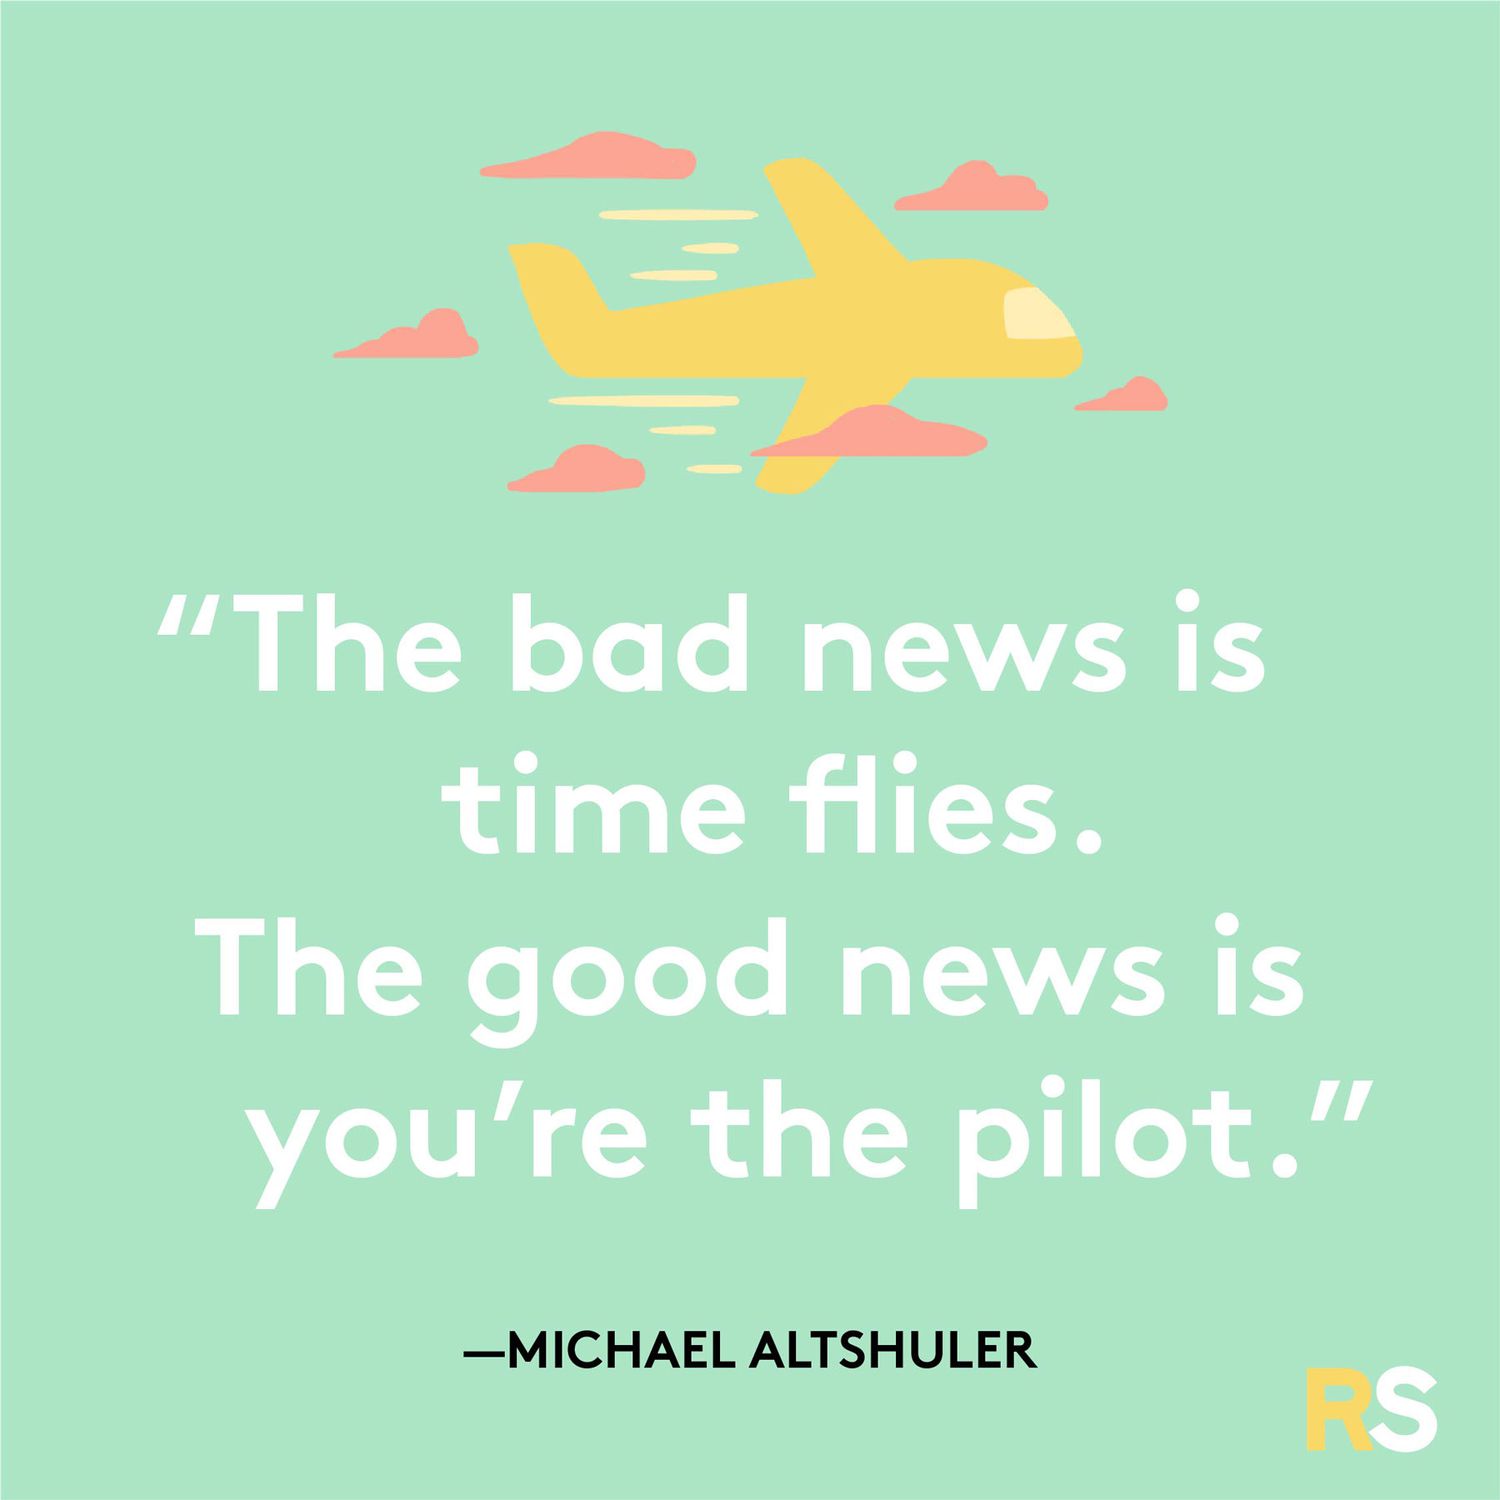 Positive motivating quotes, captions, messages – Michael Altshuler quote